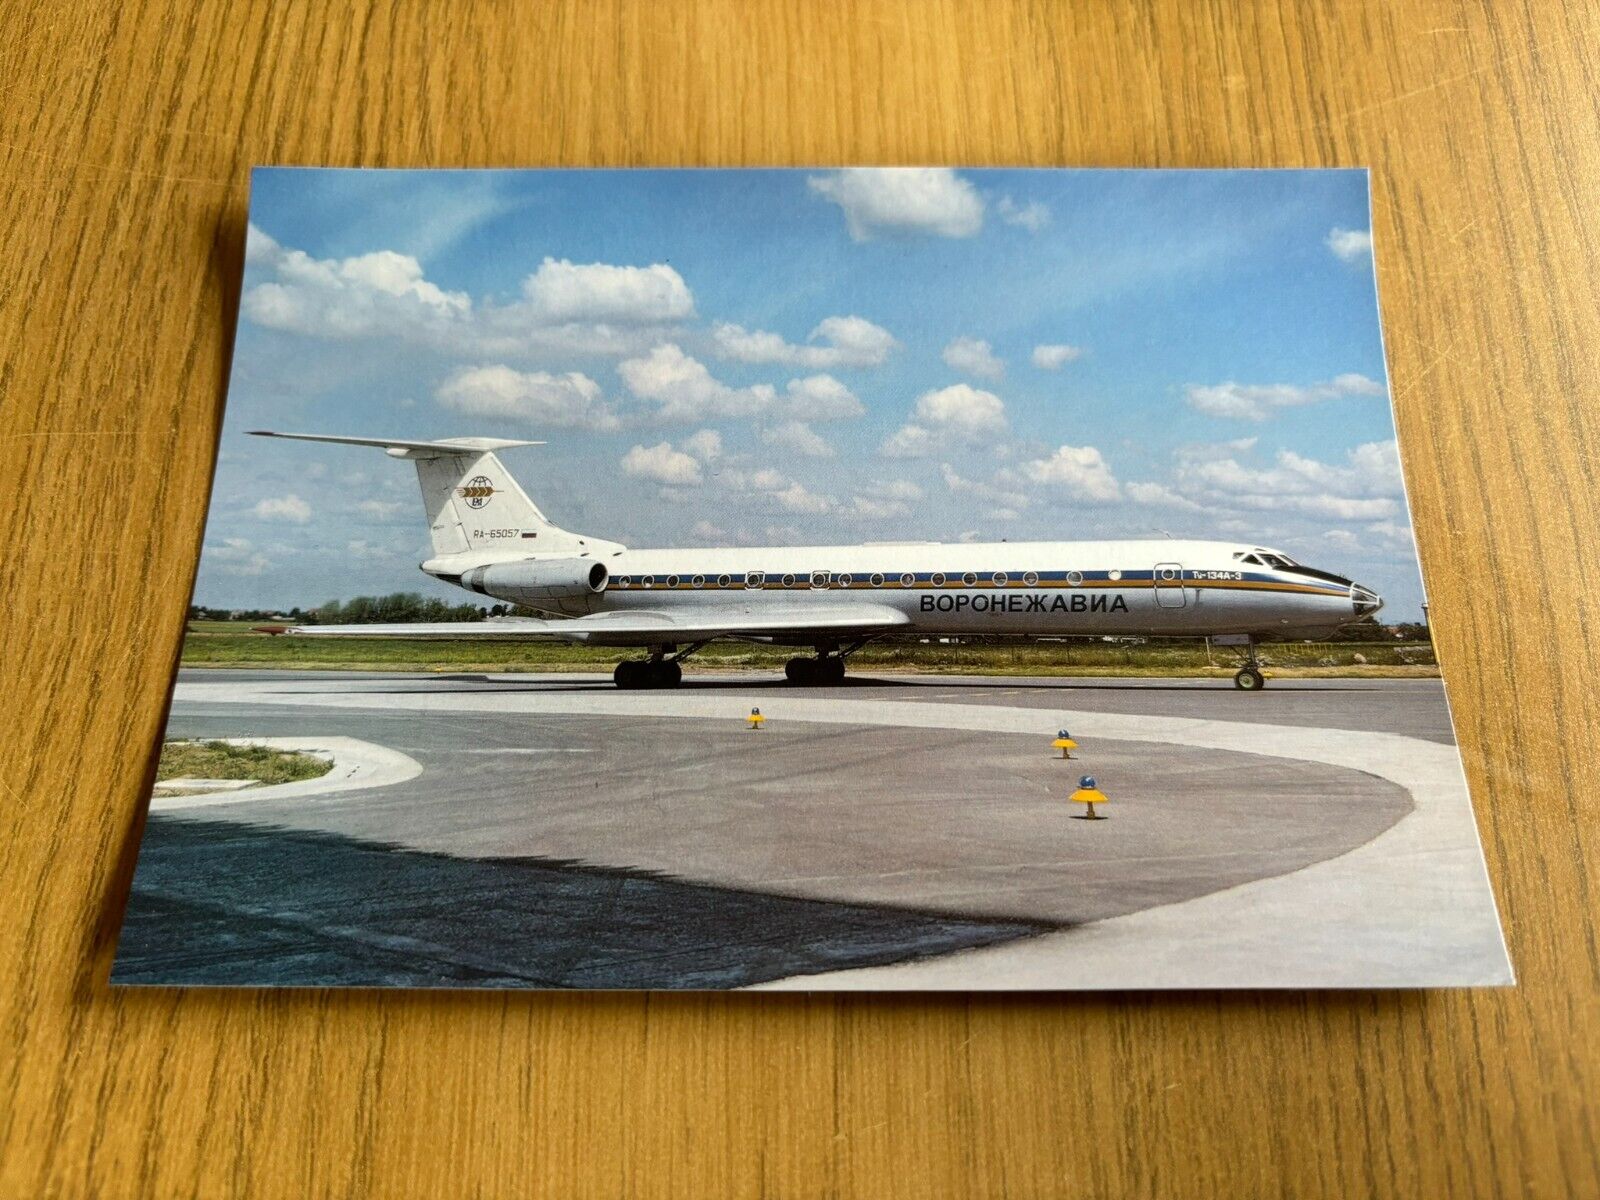 Voronezhavia Tupolev TU-134 aircraft postcard